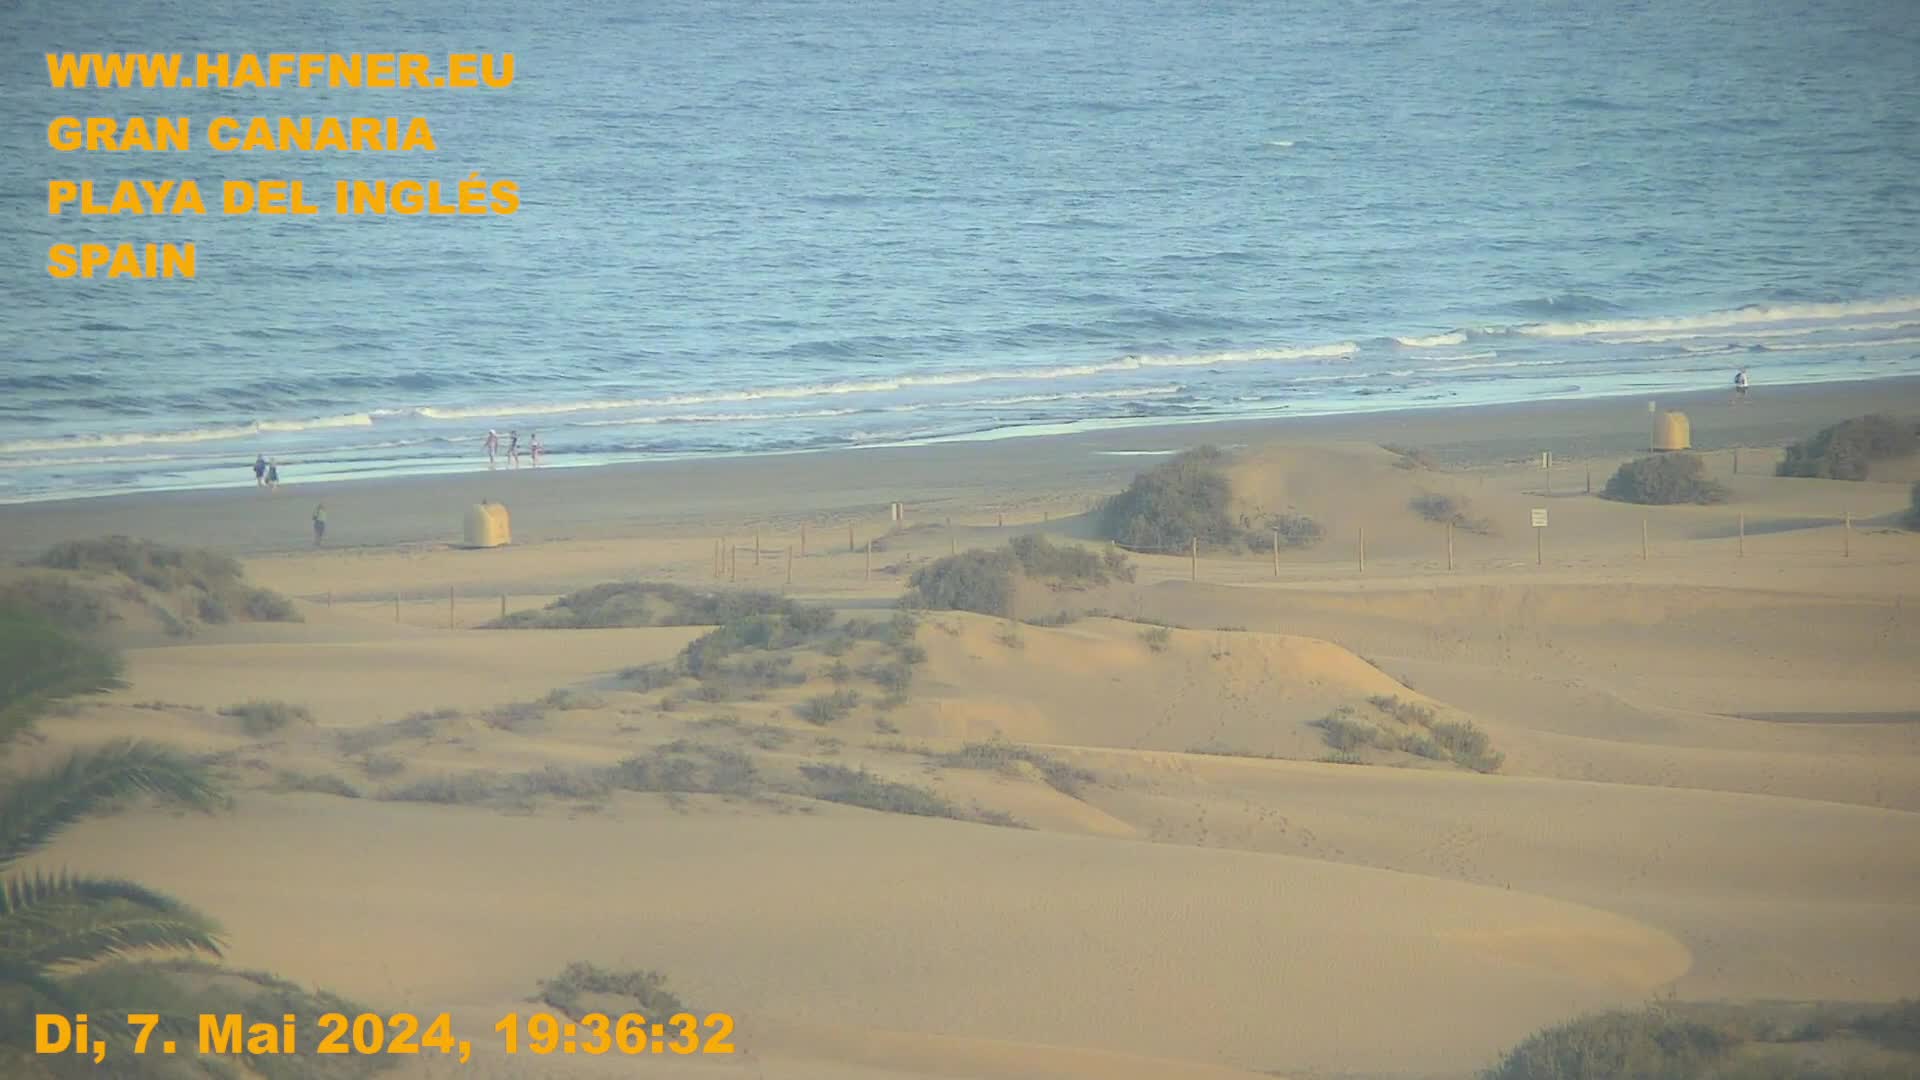 Playa del Ingles (Gran Canaria) Sat. 19:52